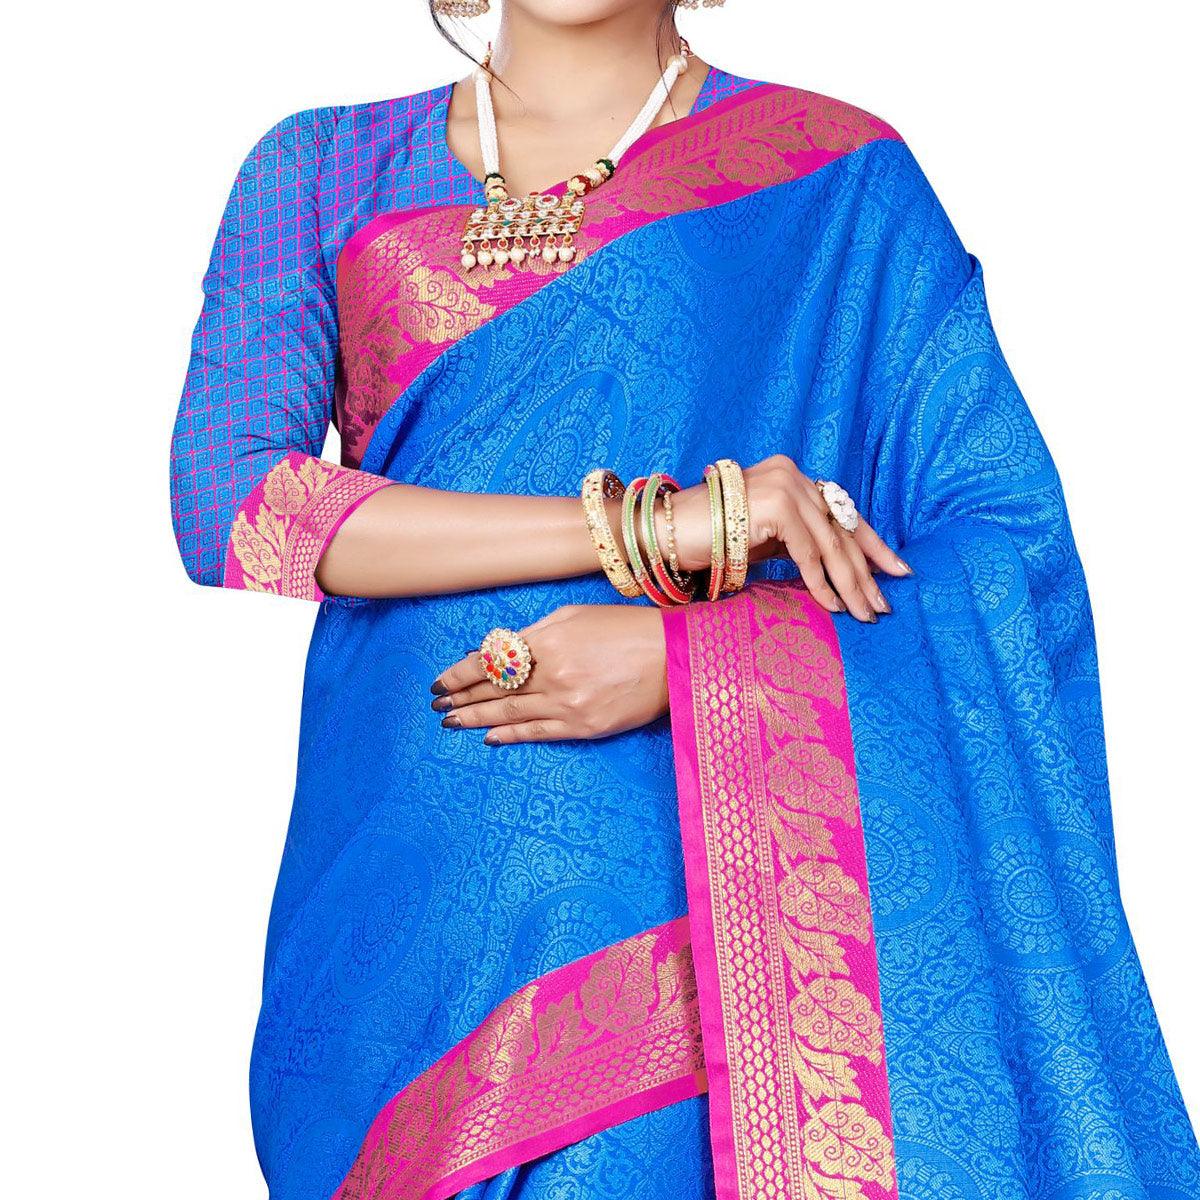 Blooming Blue Colored Festive Wear Woven Banarasi Silk Saree - Peachmode